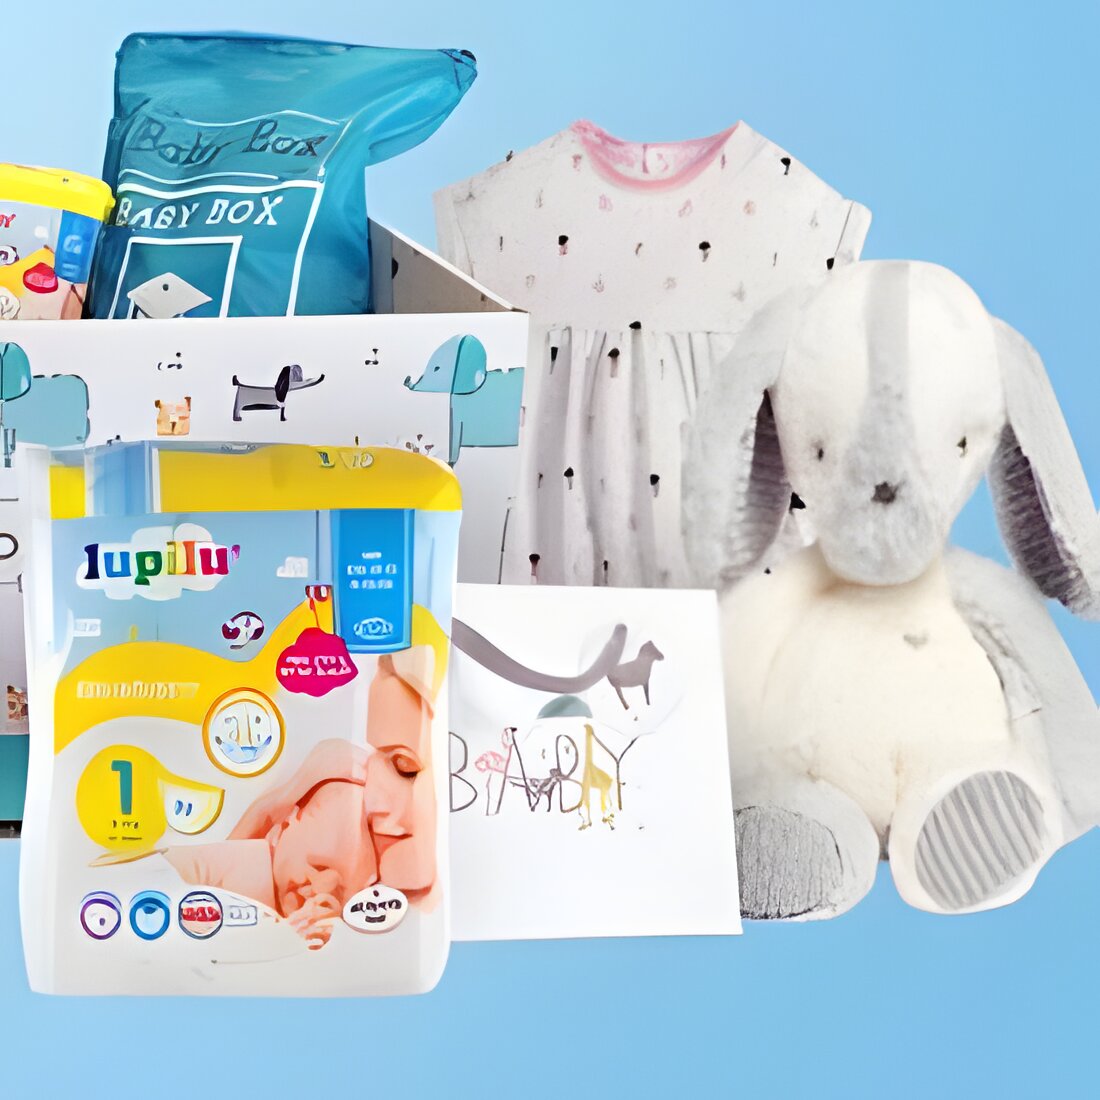 Free Baby Box Sample Pack